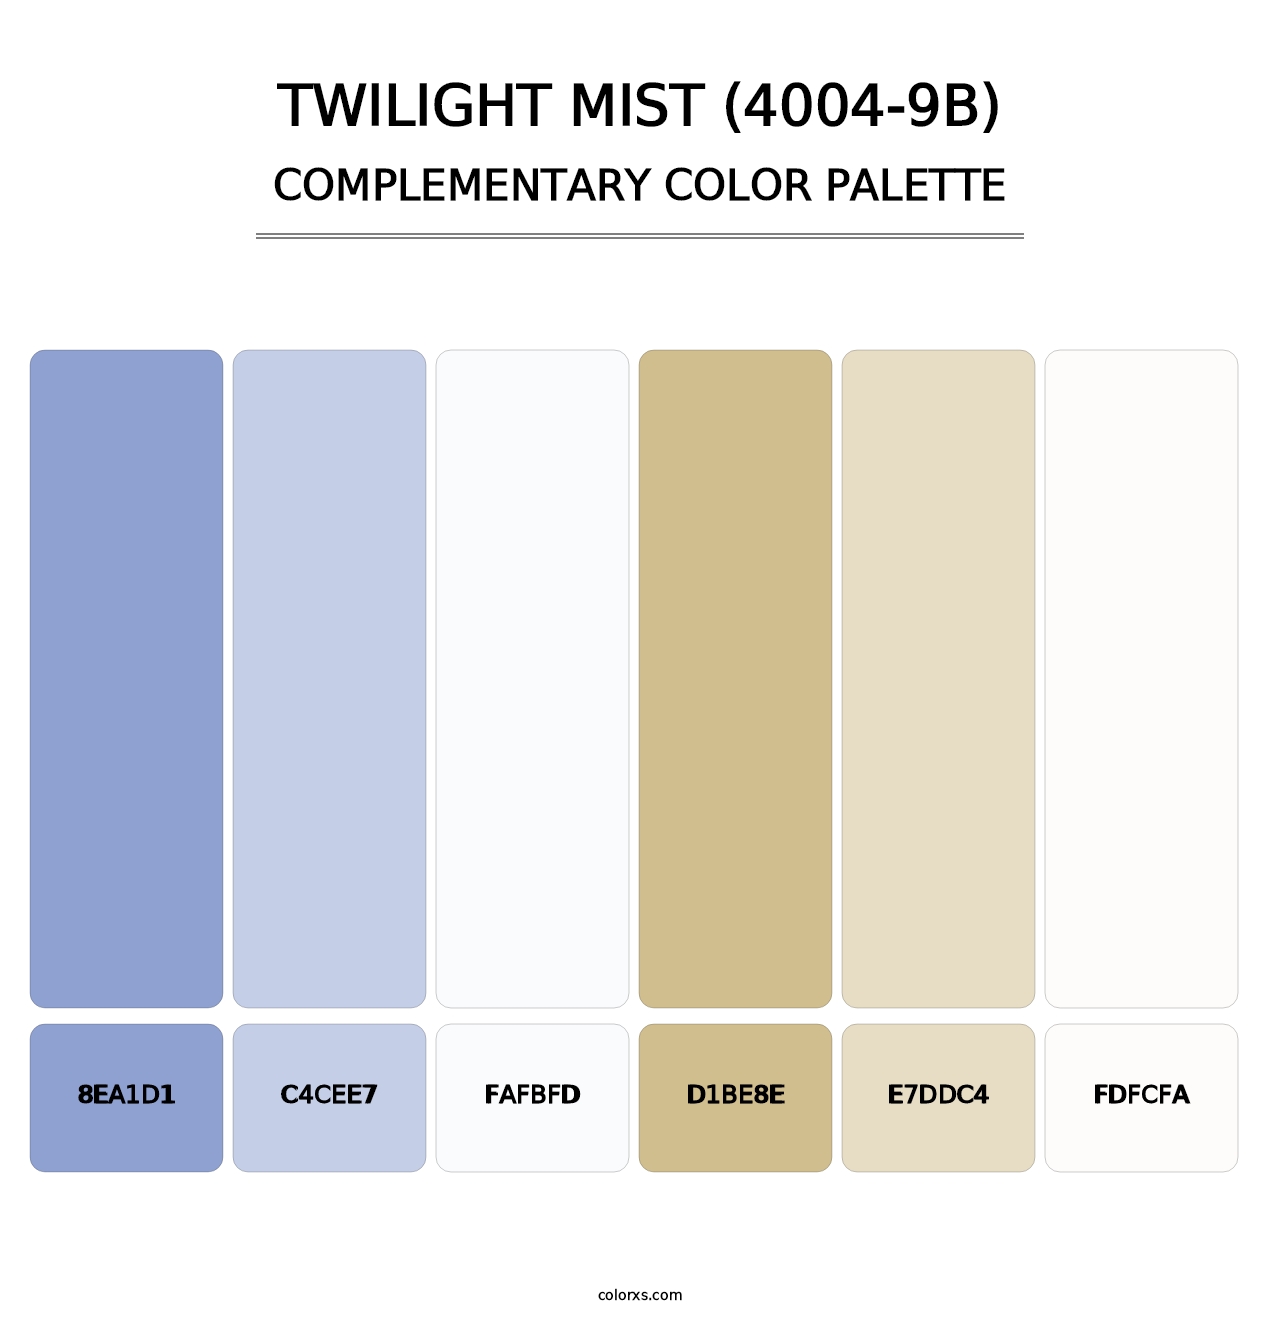 Twilight Mist (4004-9B) - Complementary Color Palette